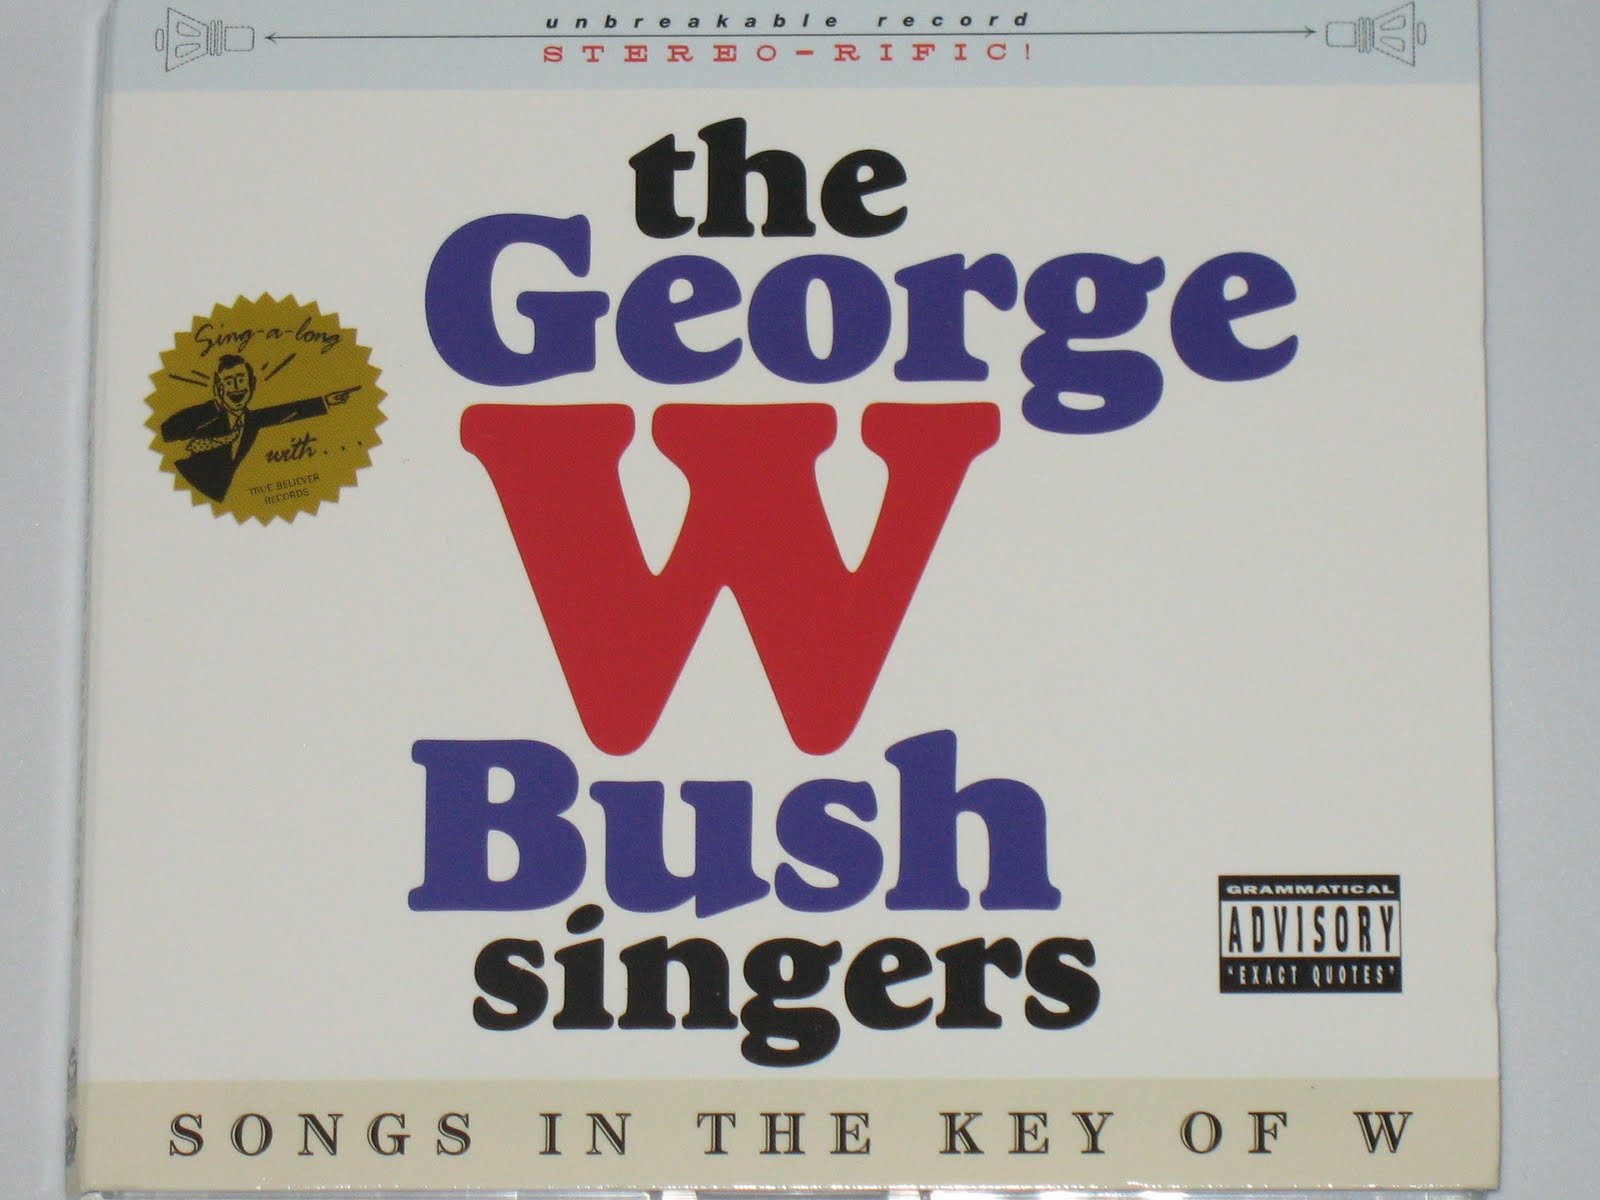 Michael Doherty's Music Log: The George W. Bush Singers: 1600 x 1200